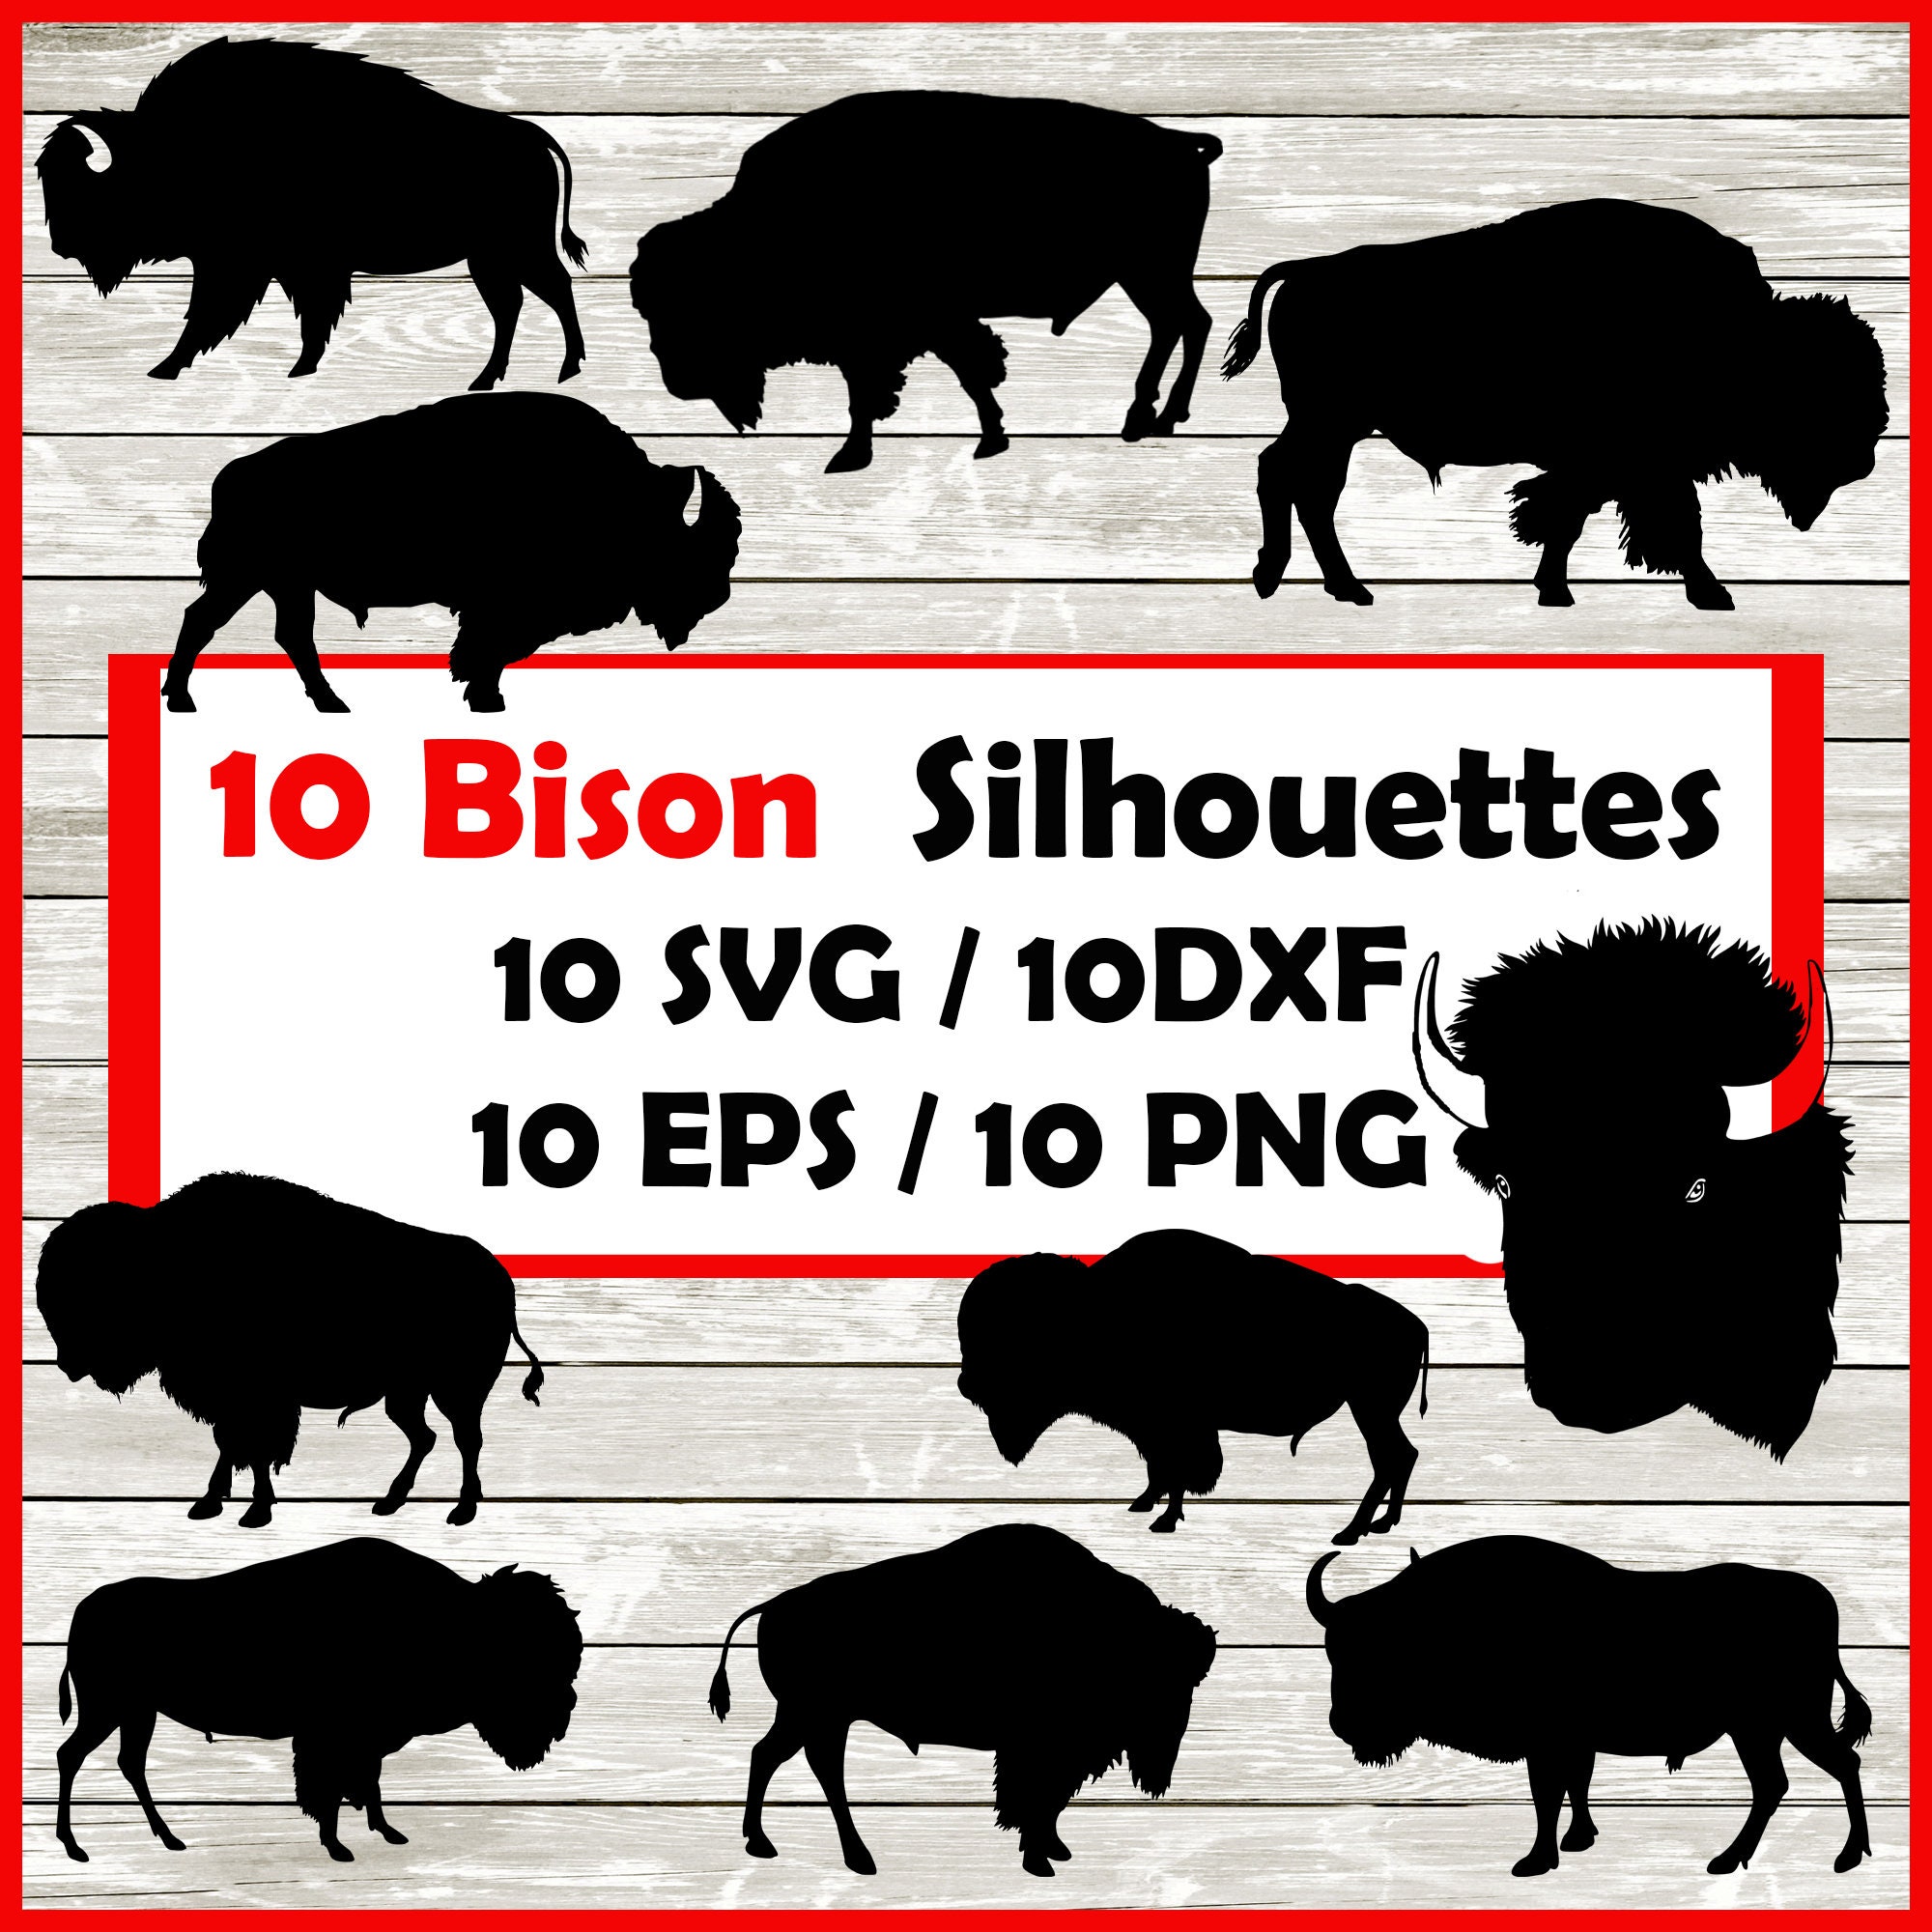 HUGE BUFFALO BILLS TB IRON-ON PATCH - 7.5 x 10.5 $10.04 - PicClick